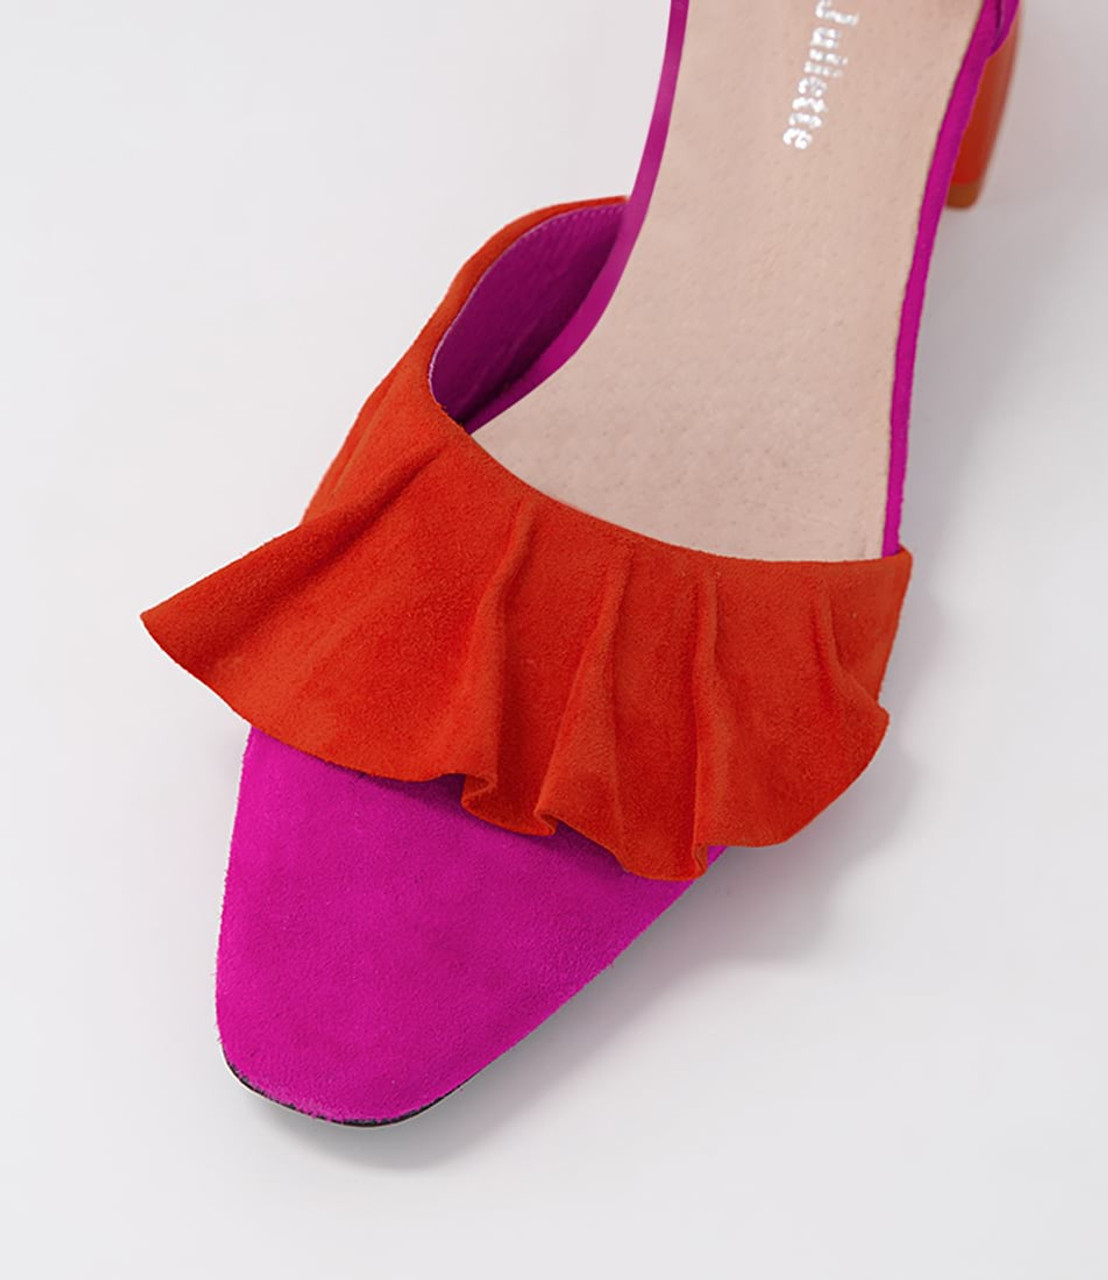 Shoe Republic La Black Orange Platform Stiletto Heels Shoes Women's 7  (SW8)pm | eBay